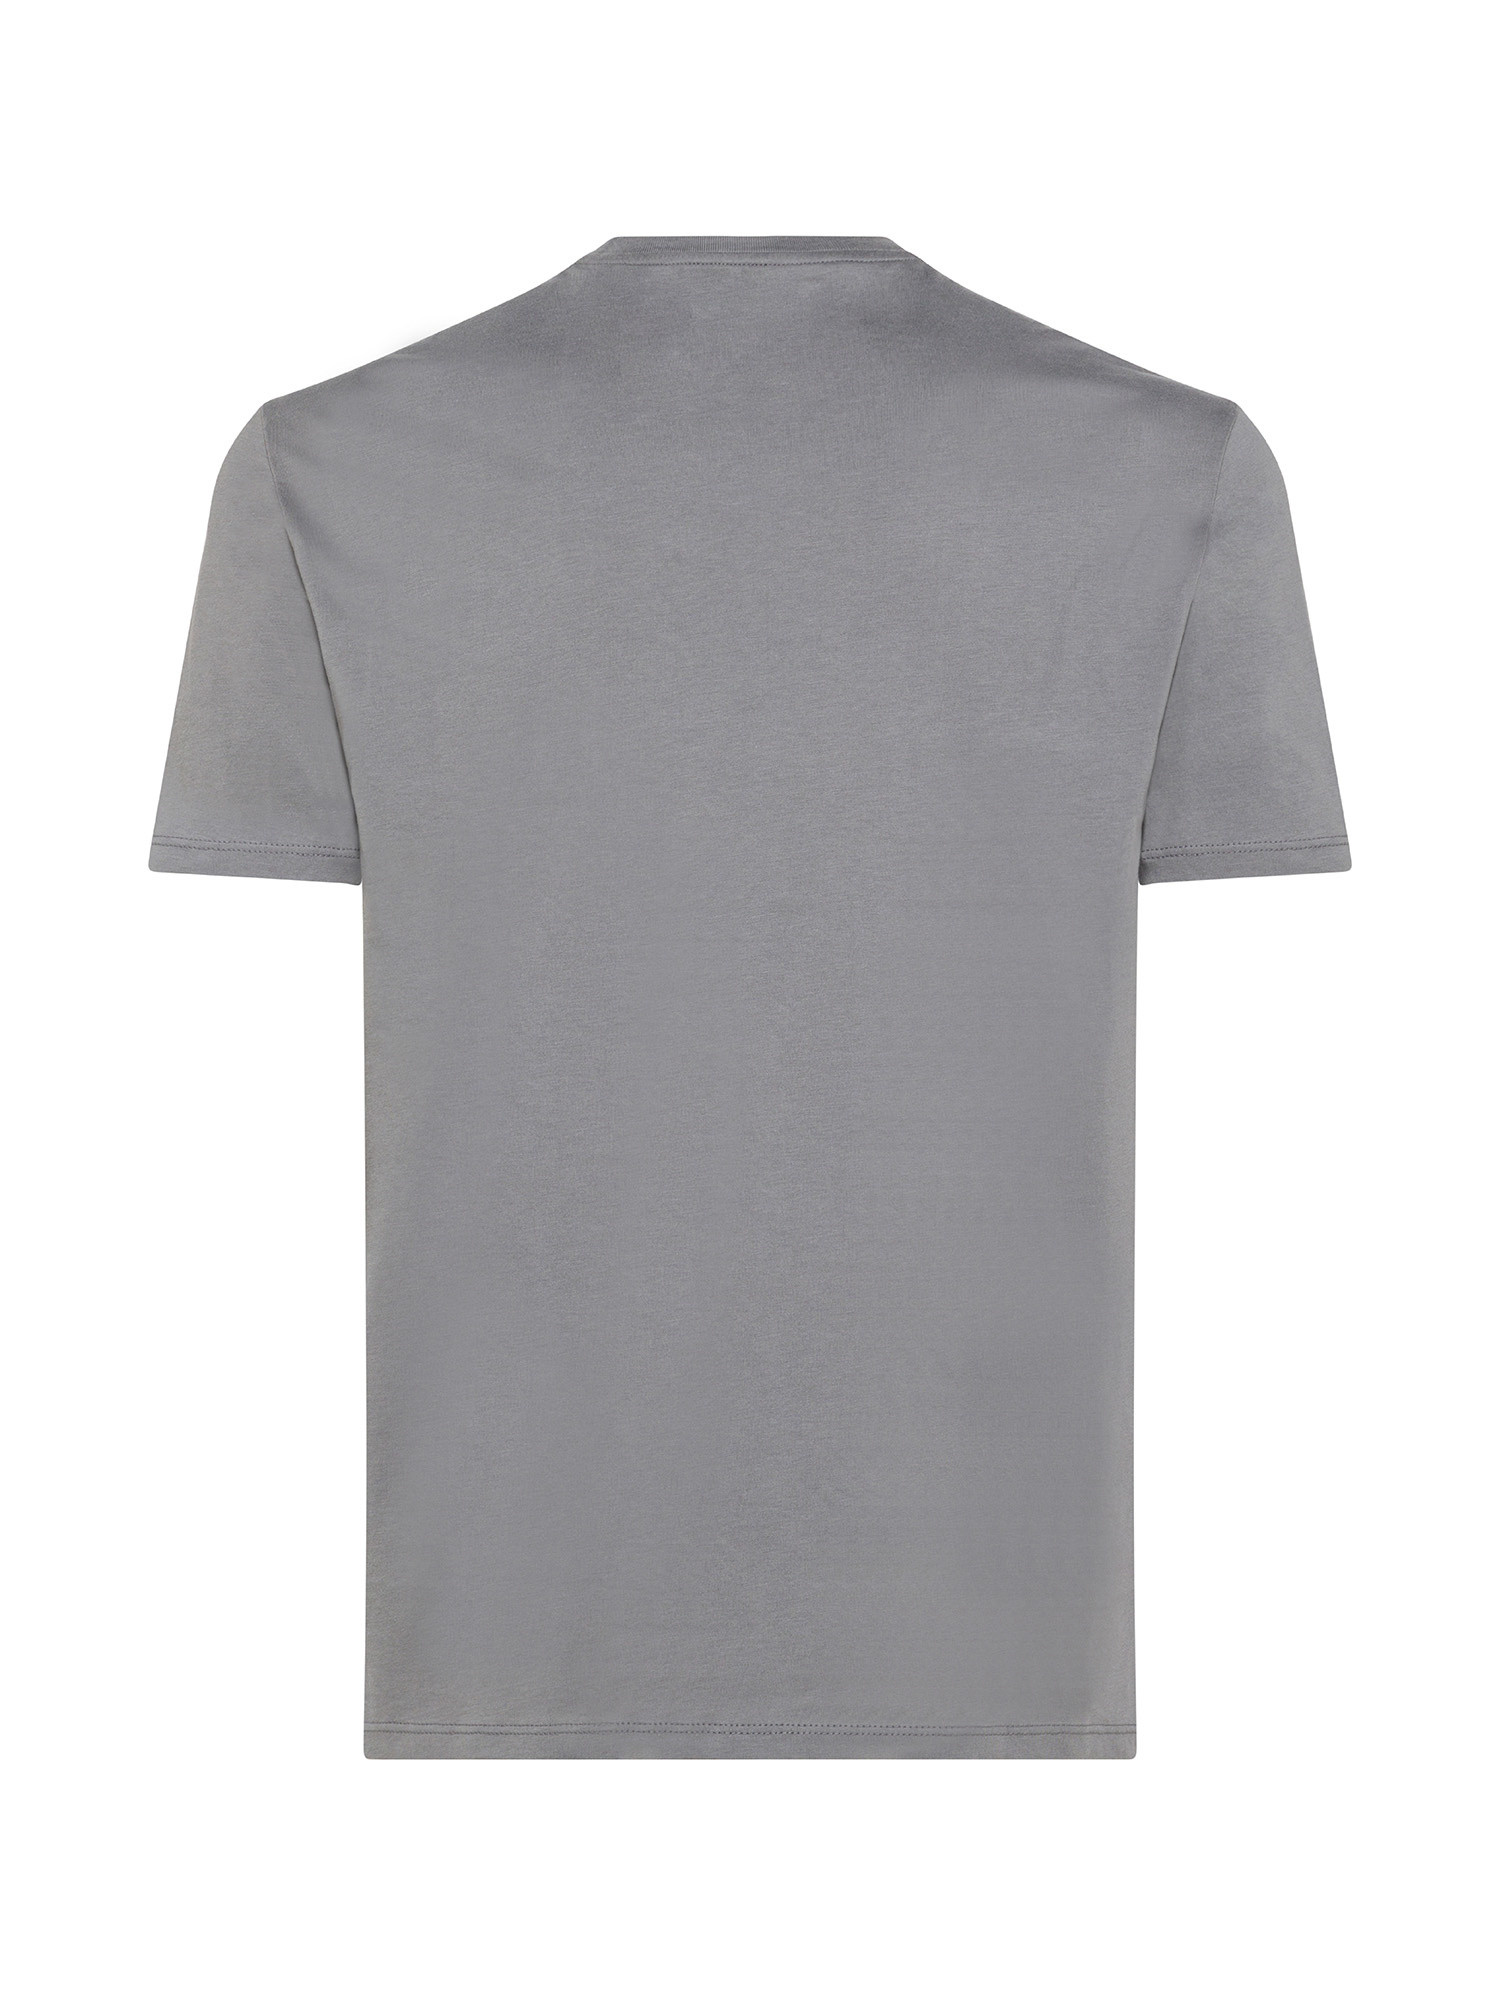 Armani Exchange - T-shirt girocollo con stampa, Grigio scuro, large image number 1